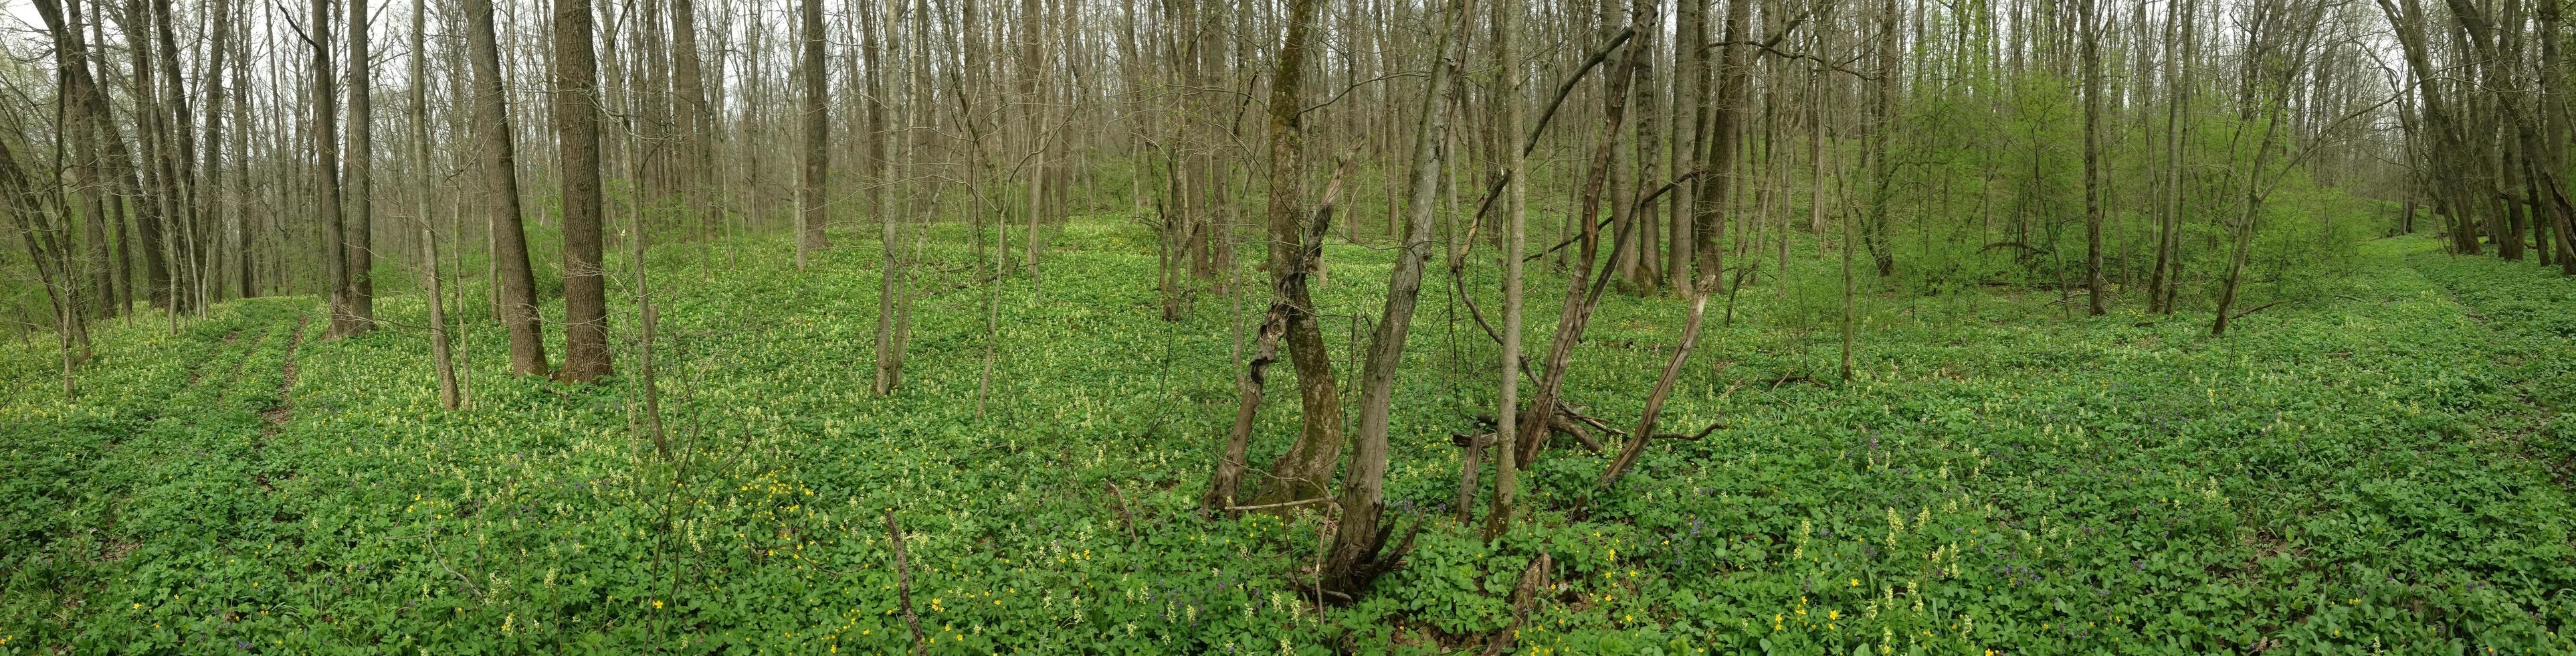 Magie Frühling Wald im Ukraine foto